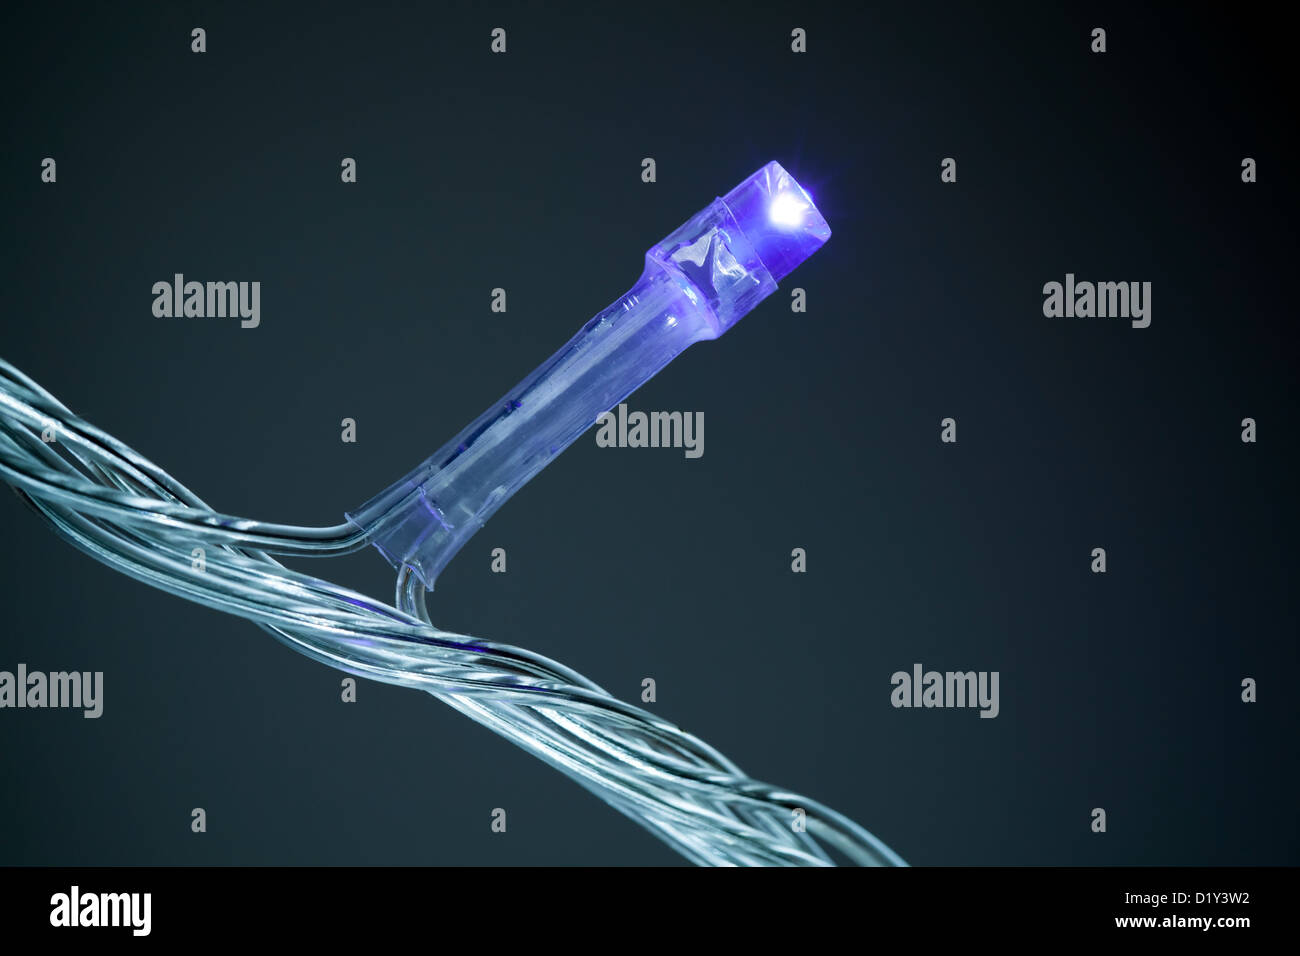 Closeup photo of blue LED (light emitting diode) light on a garland above dark background Stock Photo